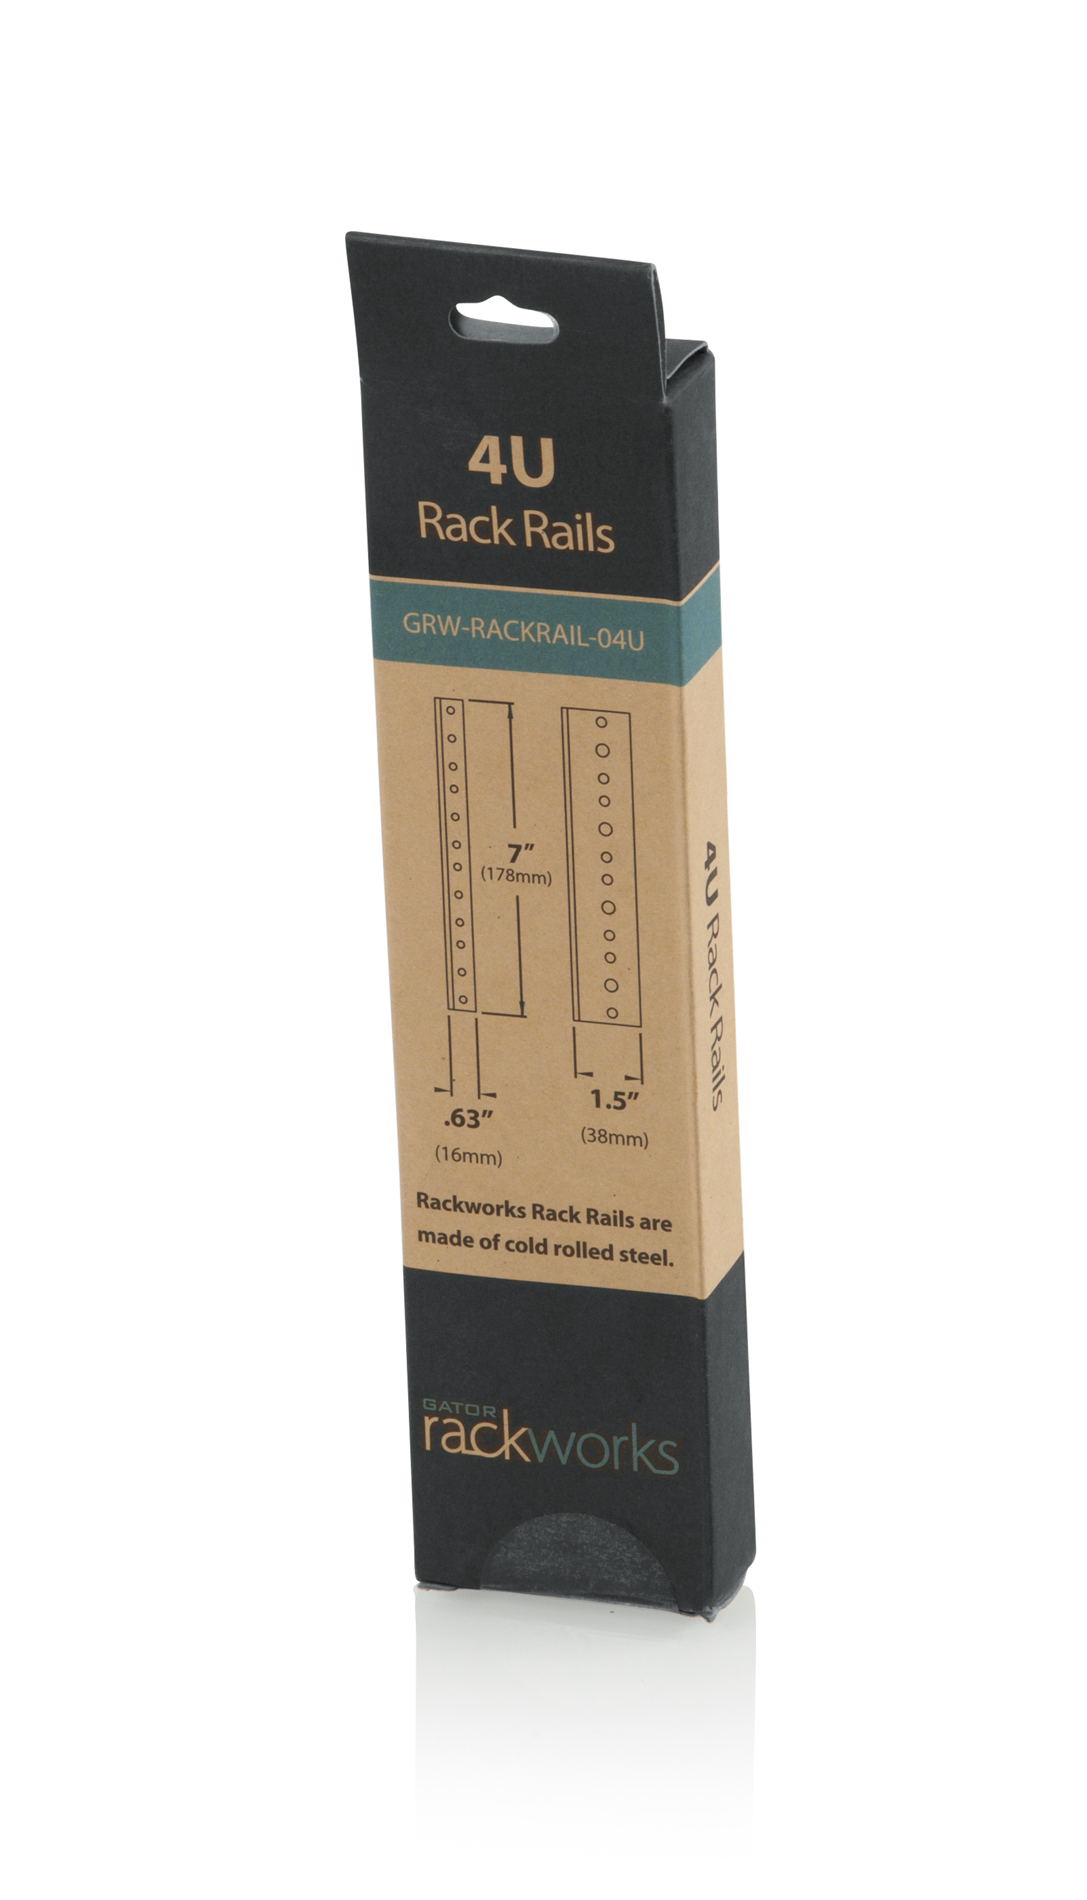 4U Rack Rails-GRW-RACKRAIL-04U